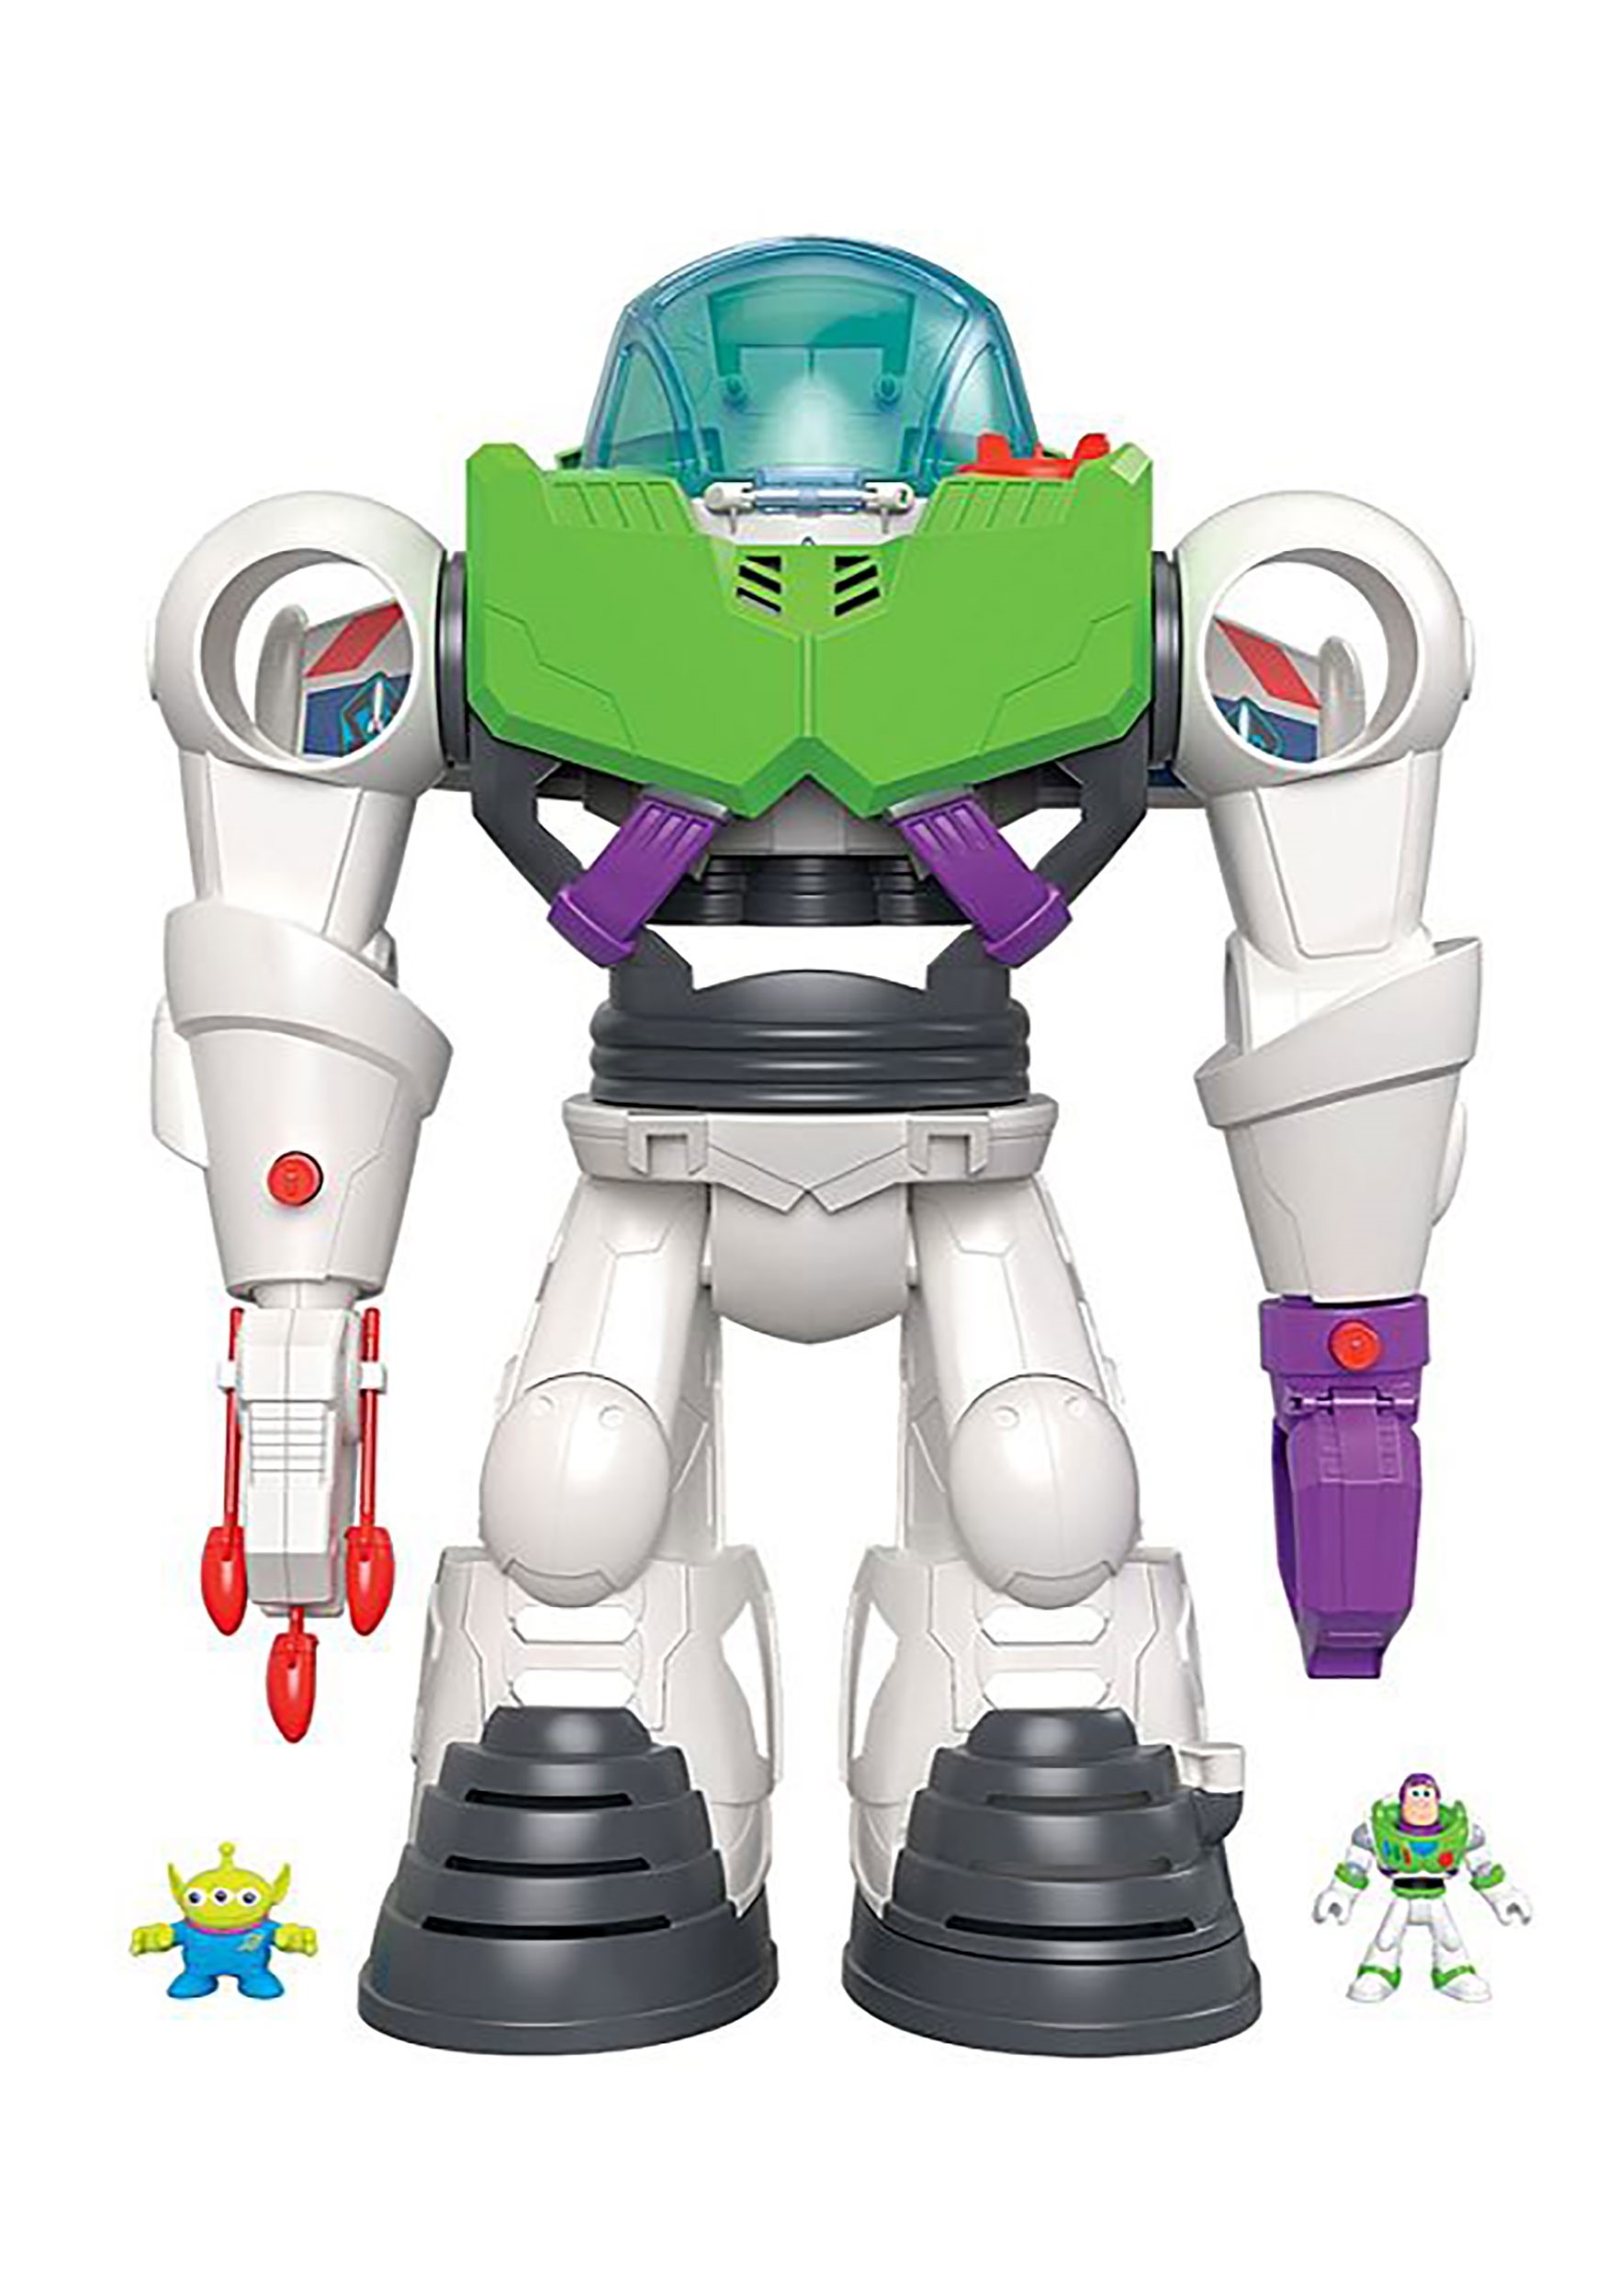 Buzz Lightyear Robot IMX Toy Story 4